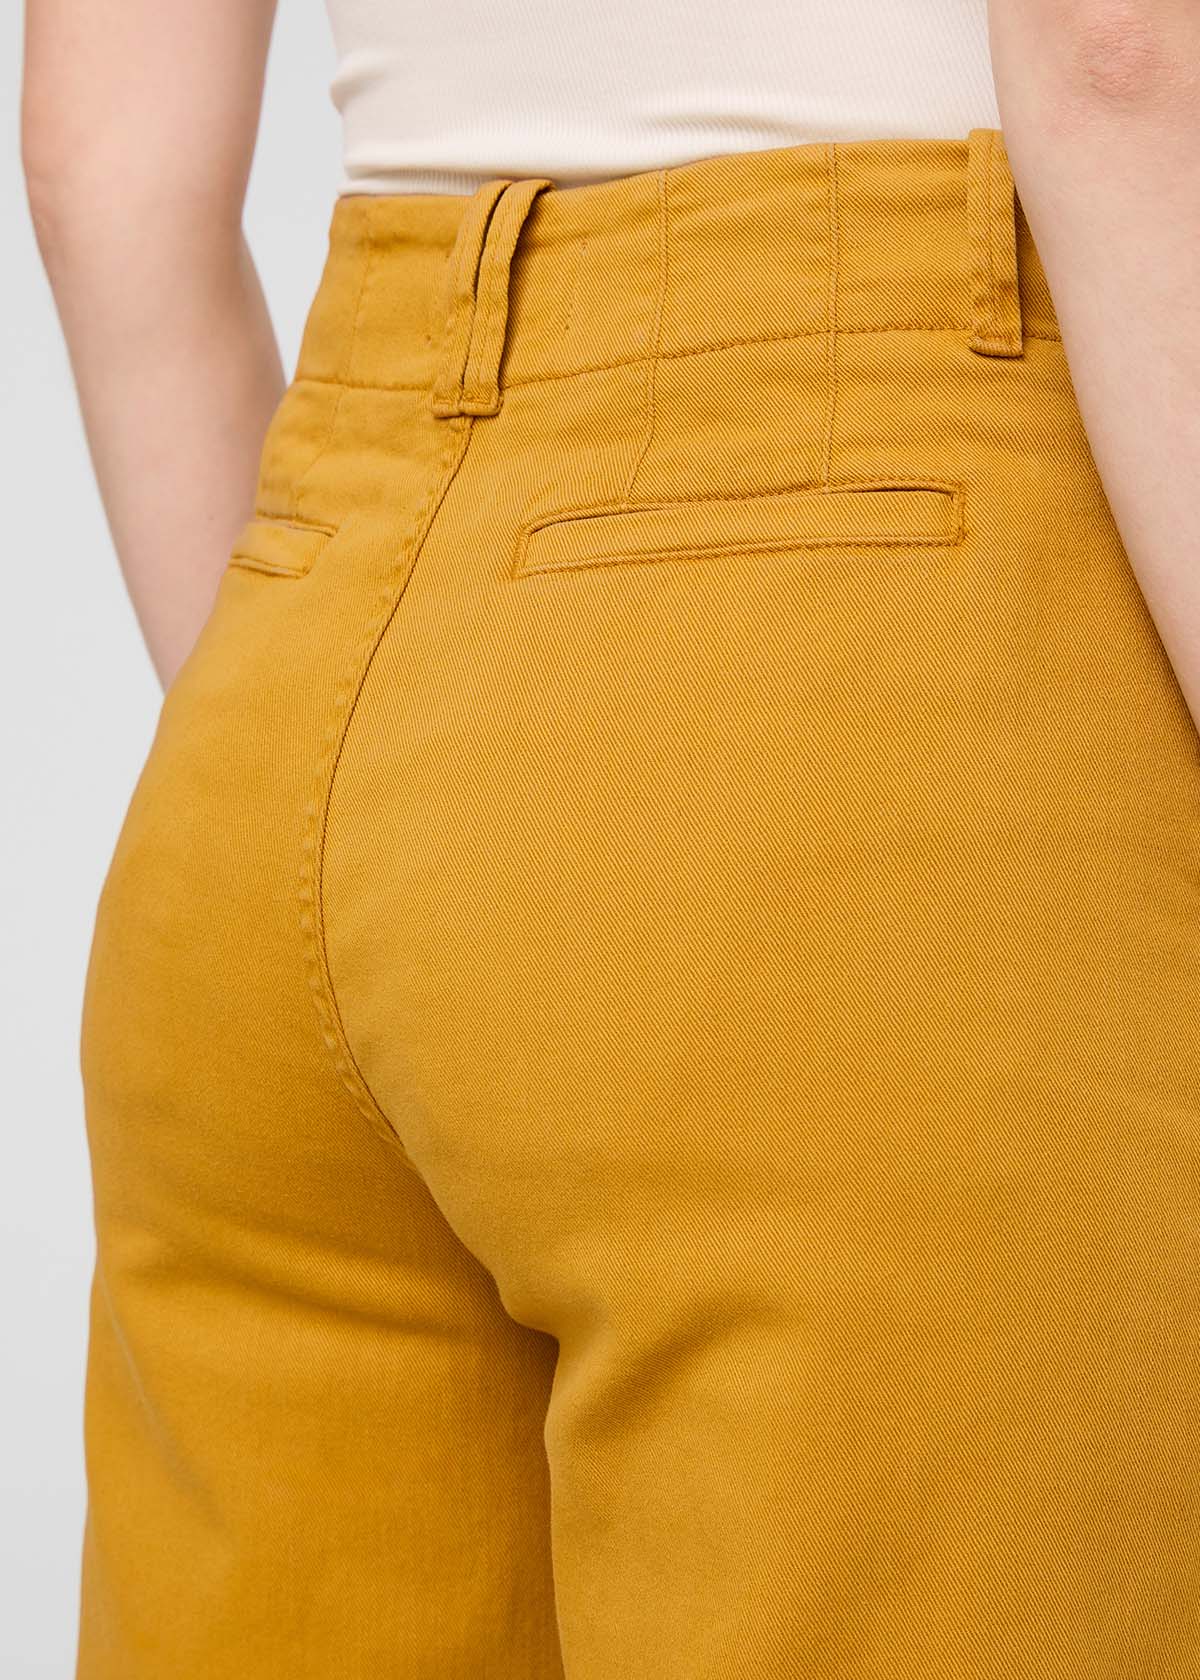 Wide-leg Twill Pants - Mustard yellow - Ladies